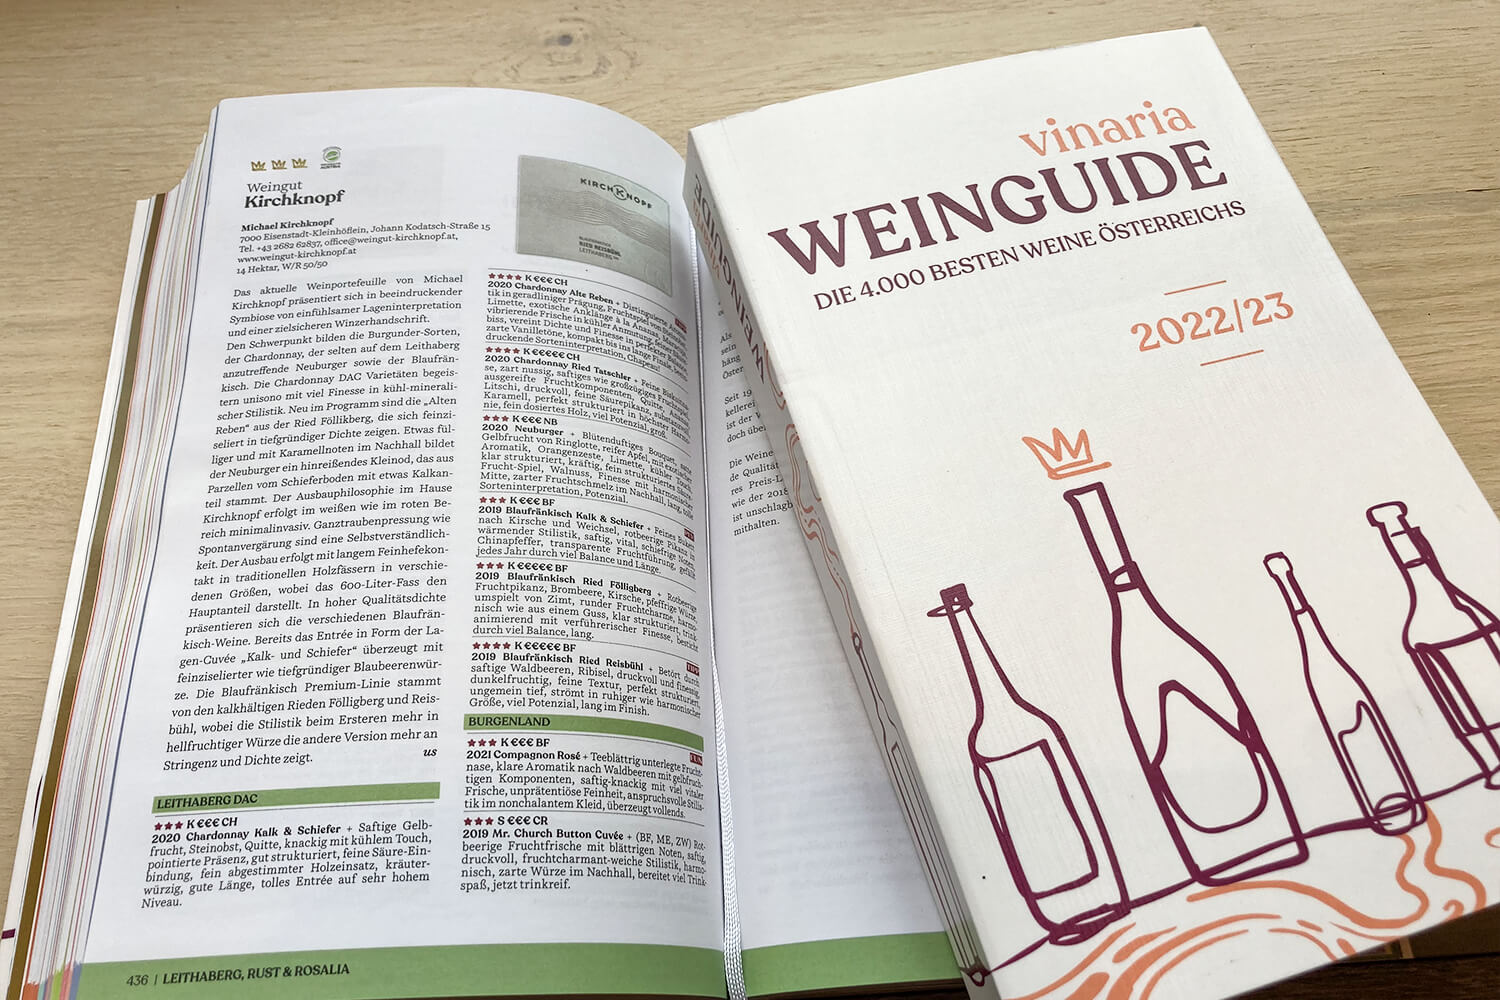 Vinaria Weinguide 2022